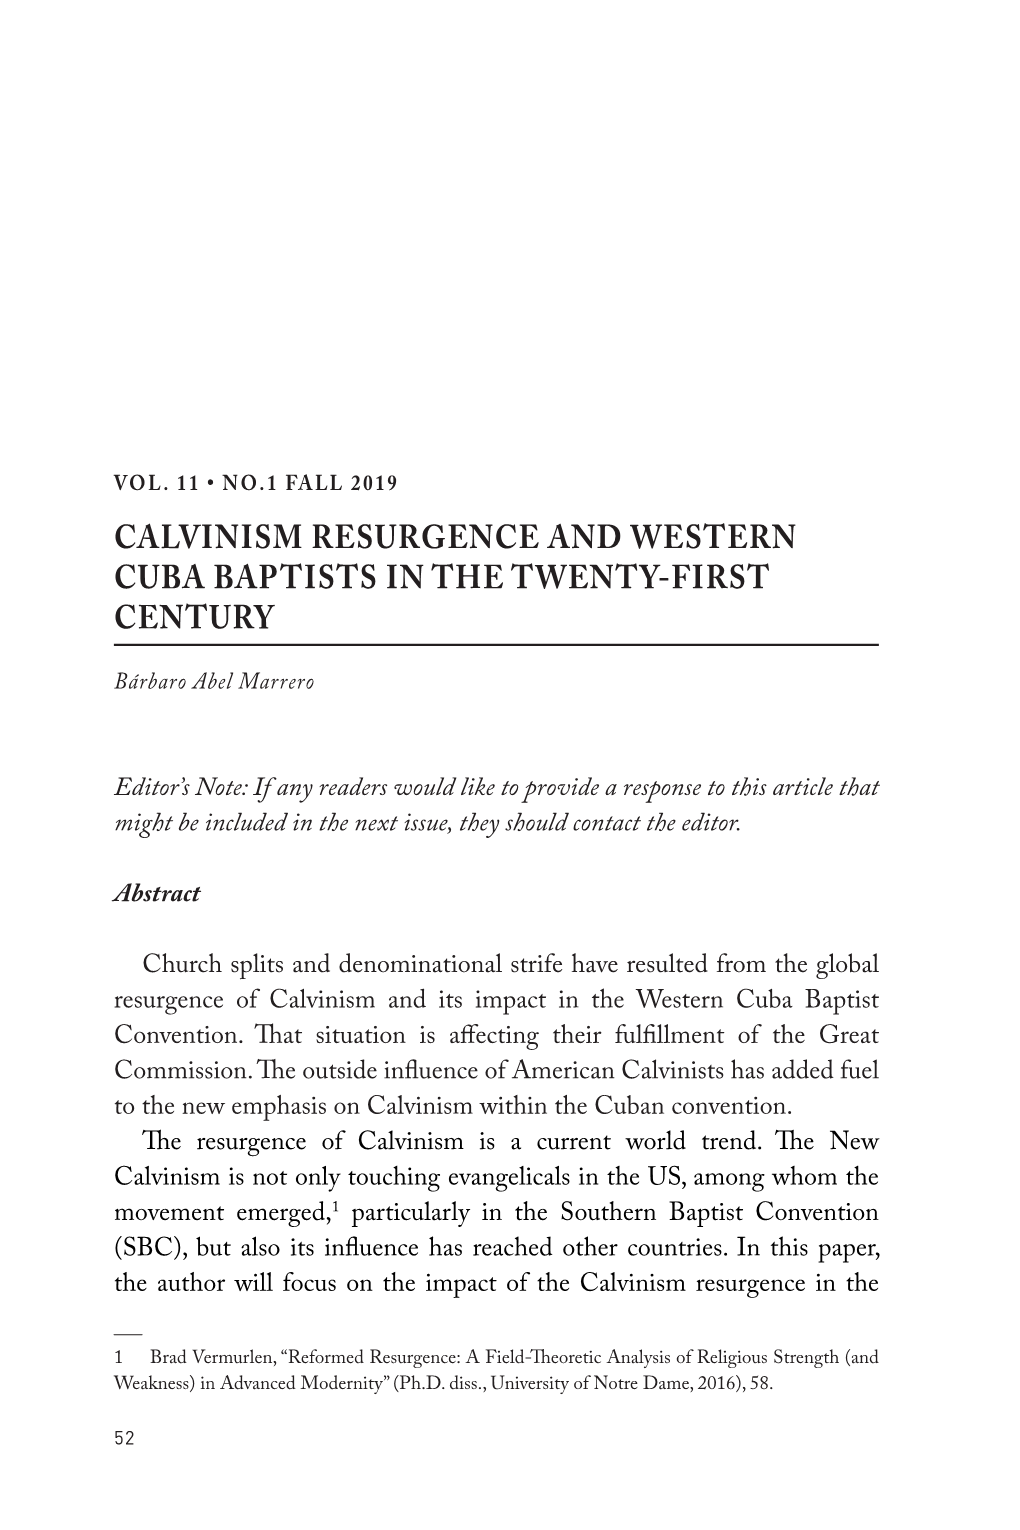 Calvinism Resurgence and Western Cuba Baptists in the Twenty-First Century